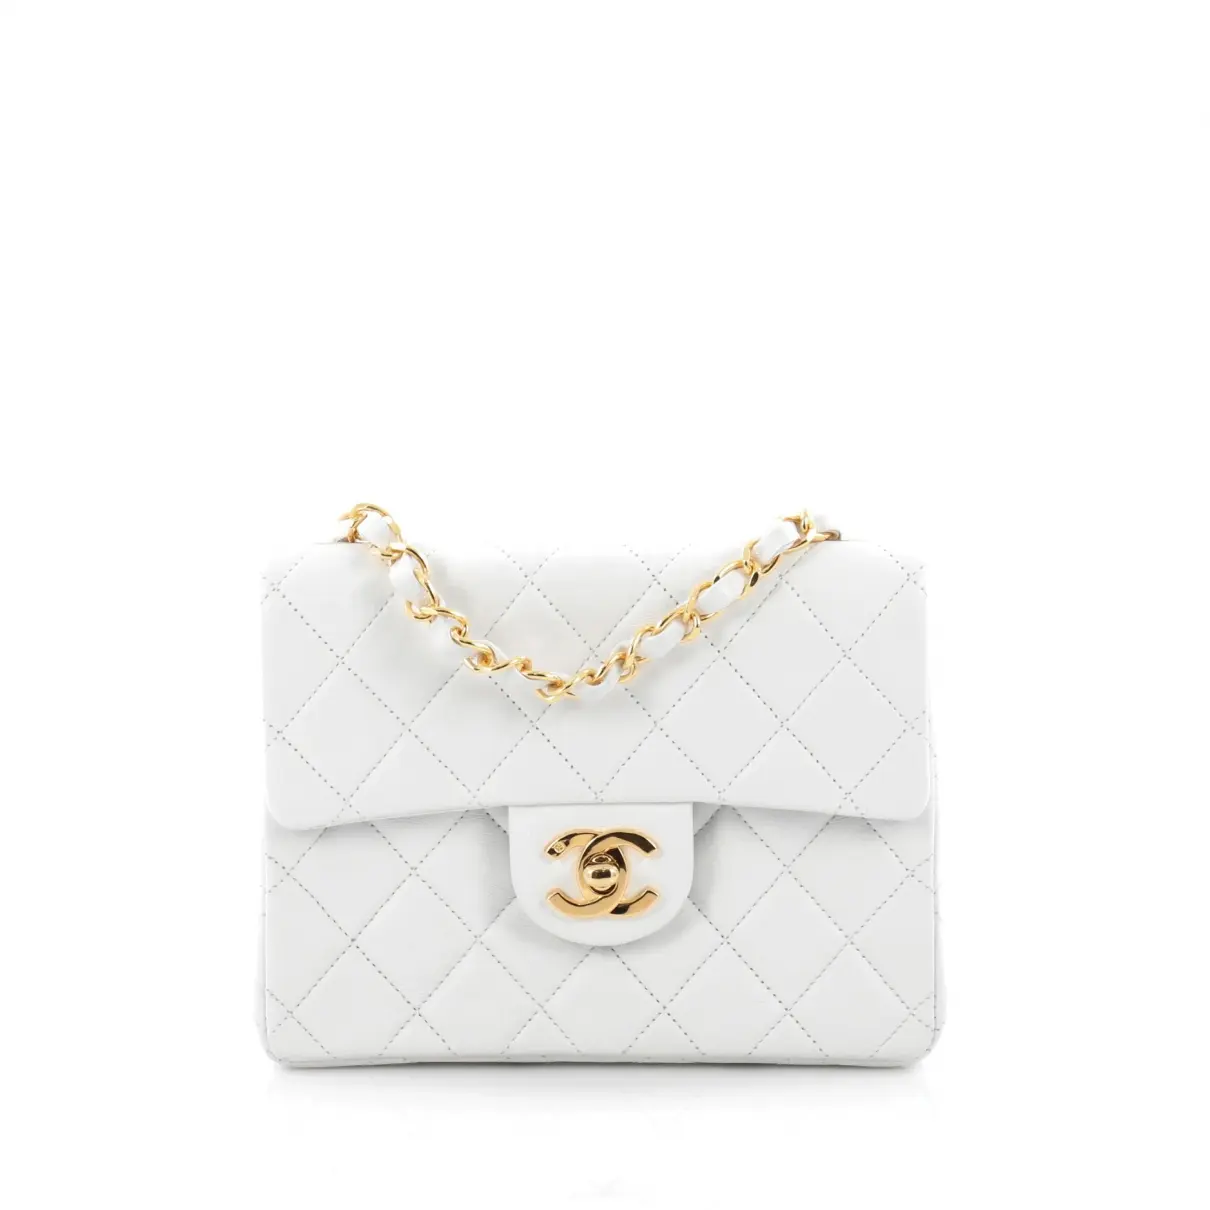 White Leather Handbag Chanel - Vintage